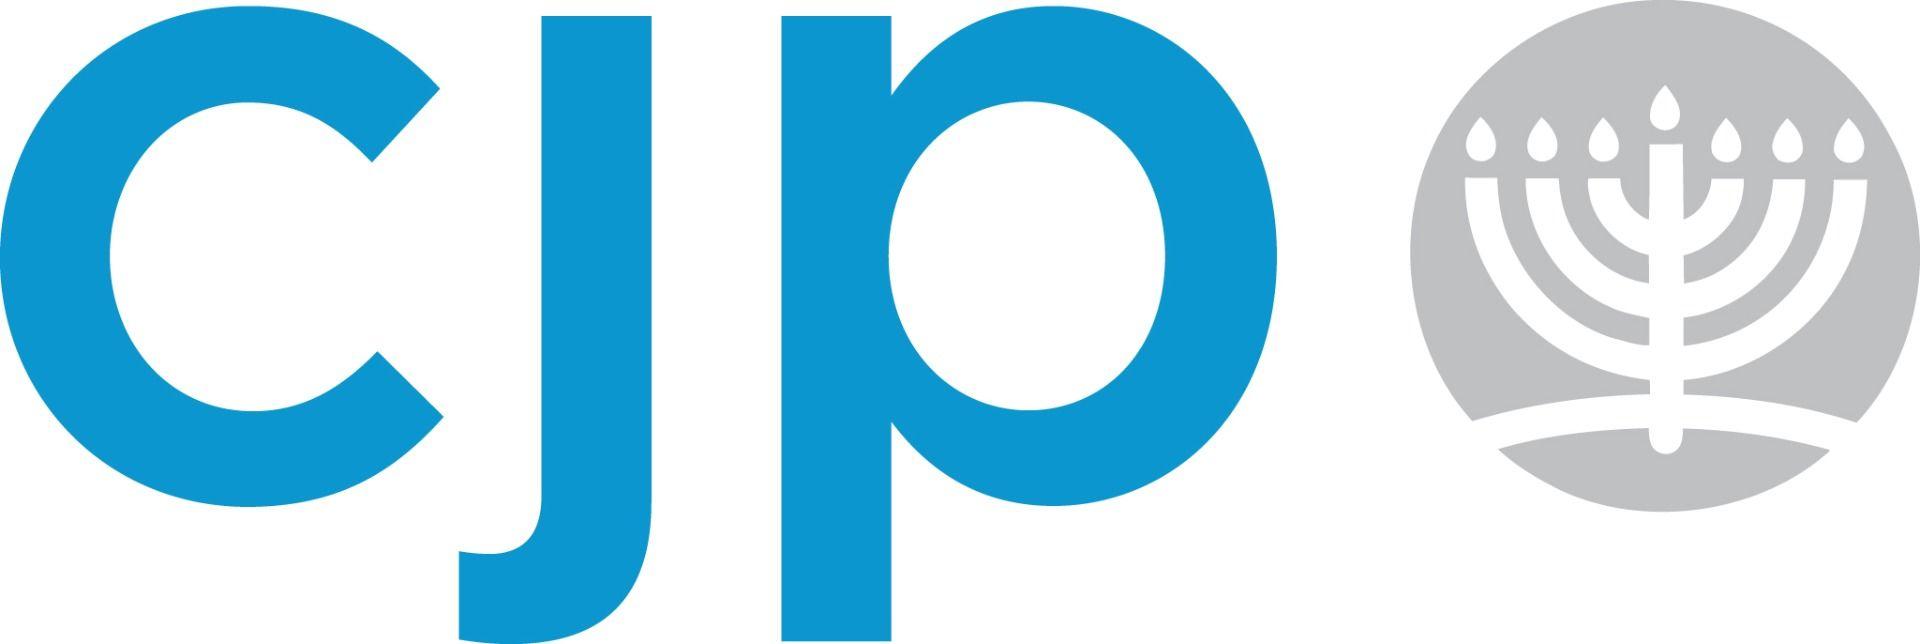 Jewish Logo - logo | Combined Jewish Philanthropies of Greater Boston